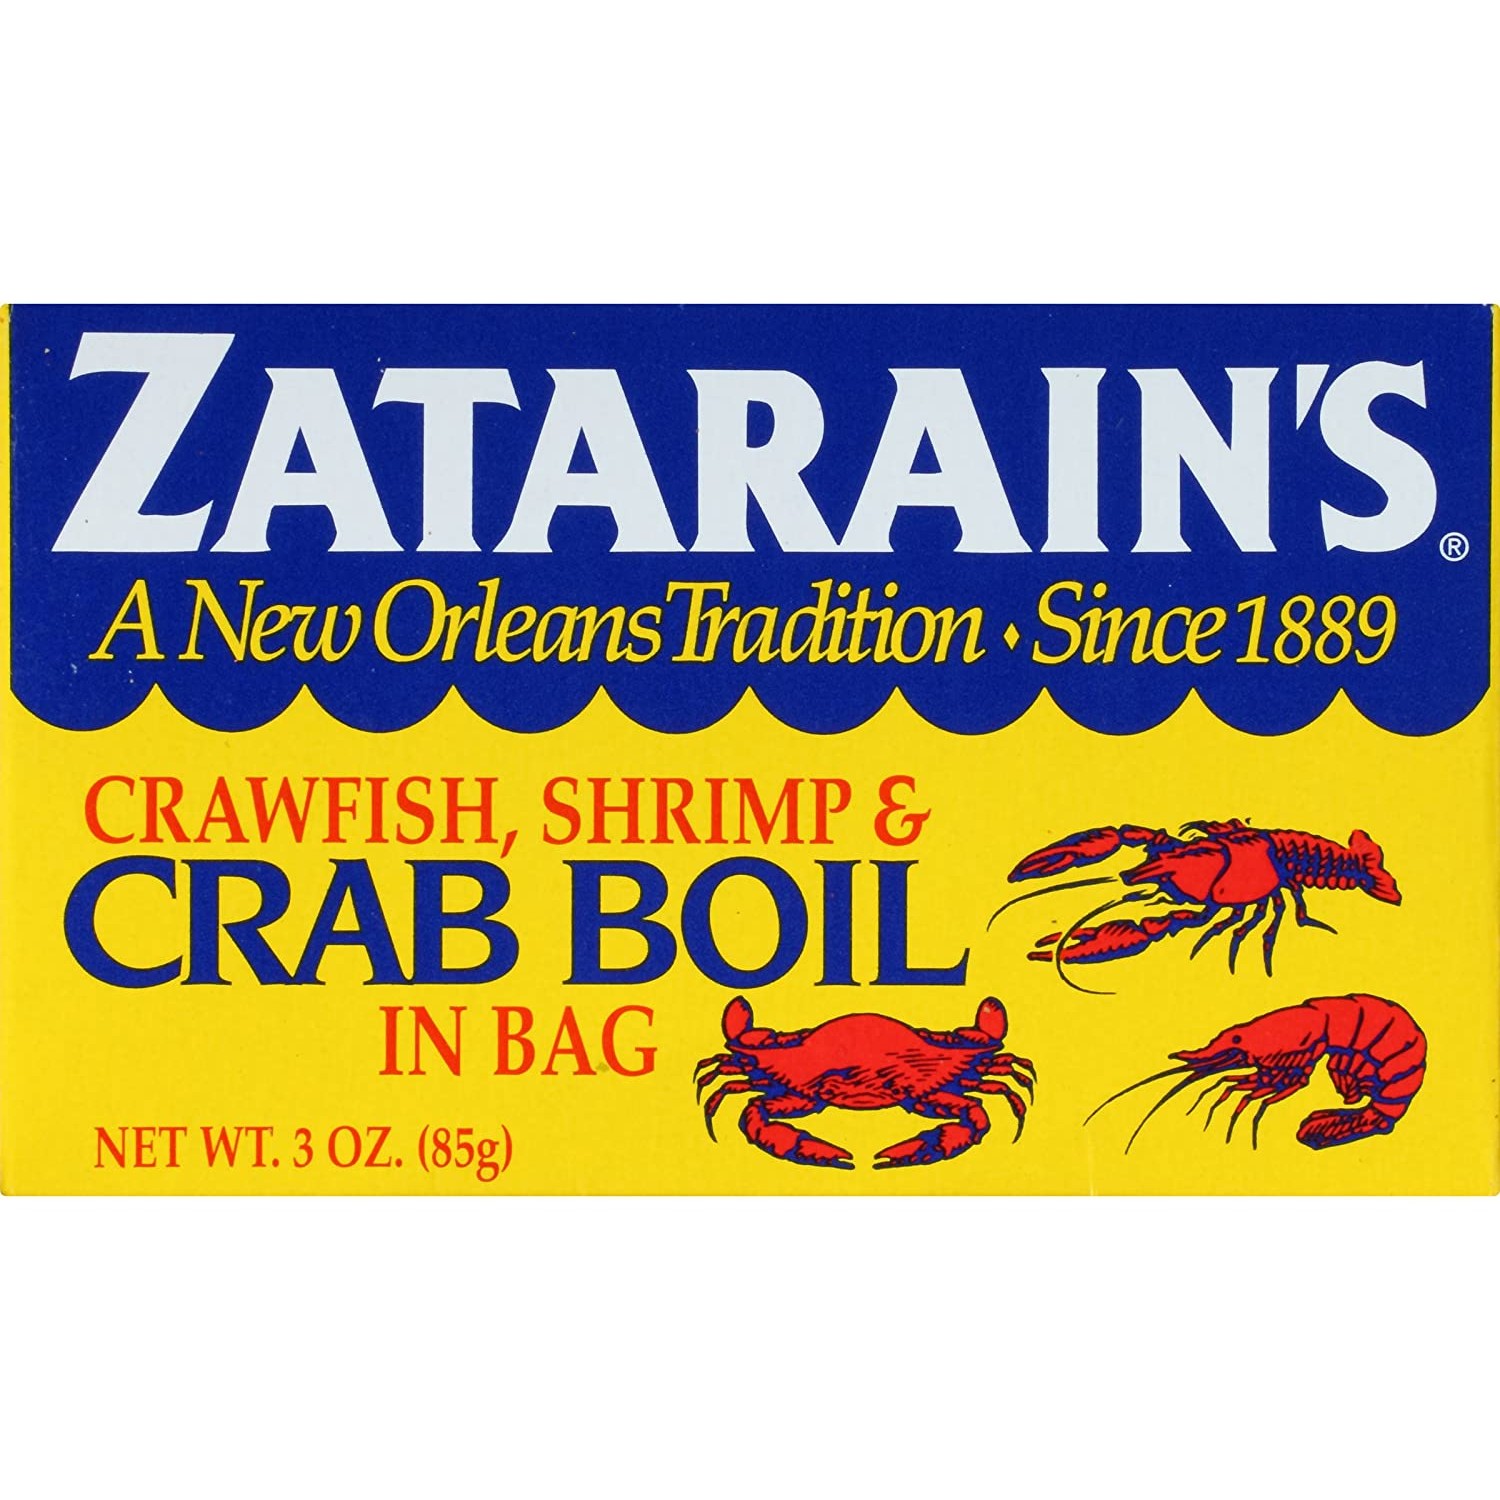 [HCM]BỘT GIA VỊ NẤU HẢI SẢN Zatarains Crawfish Shrimp & Crab Boil 85g